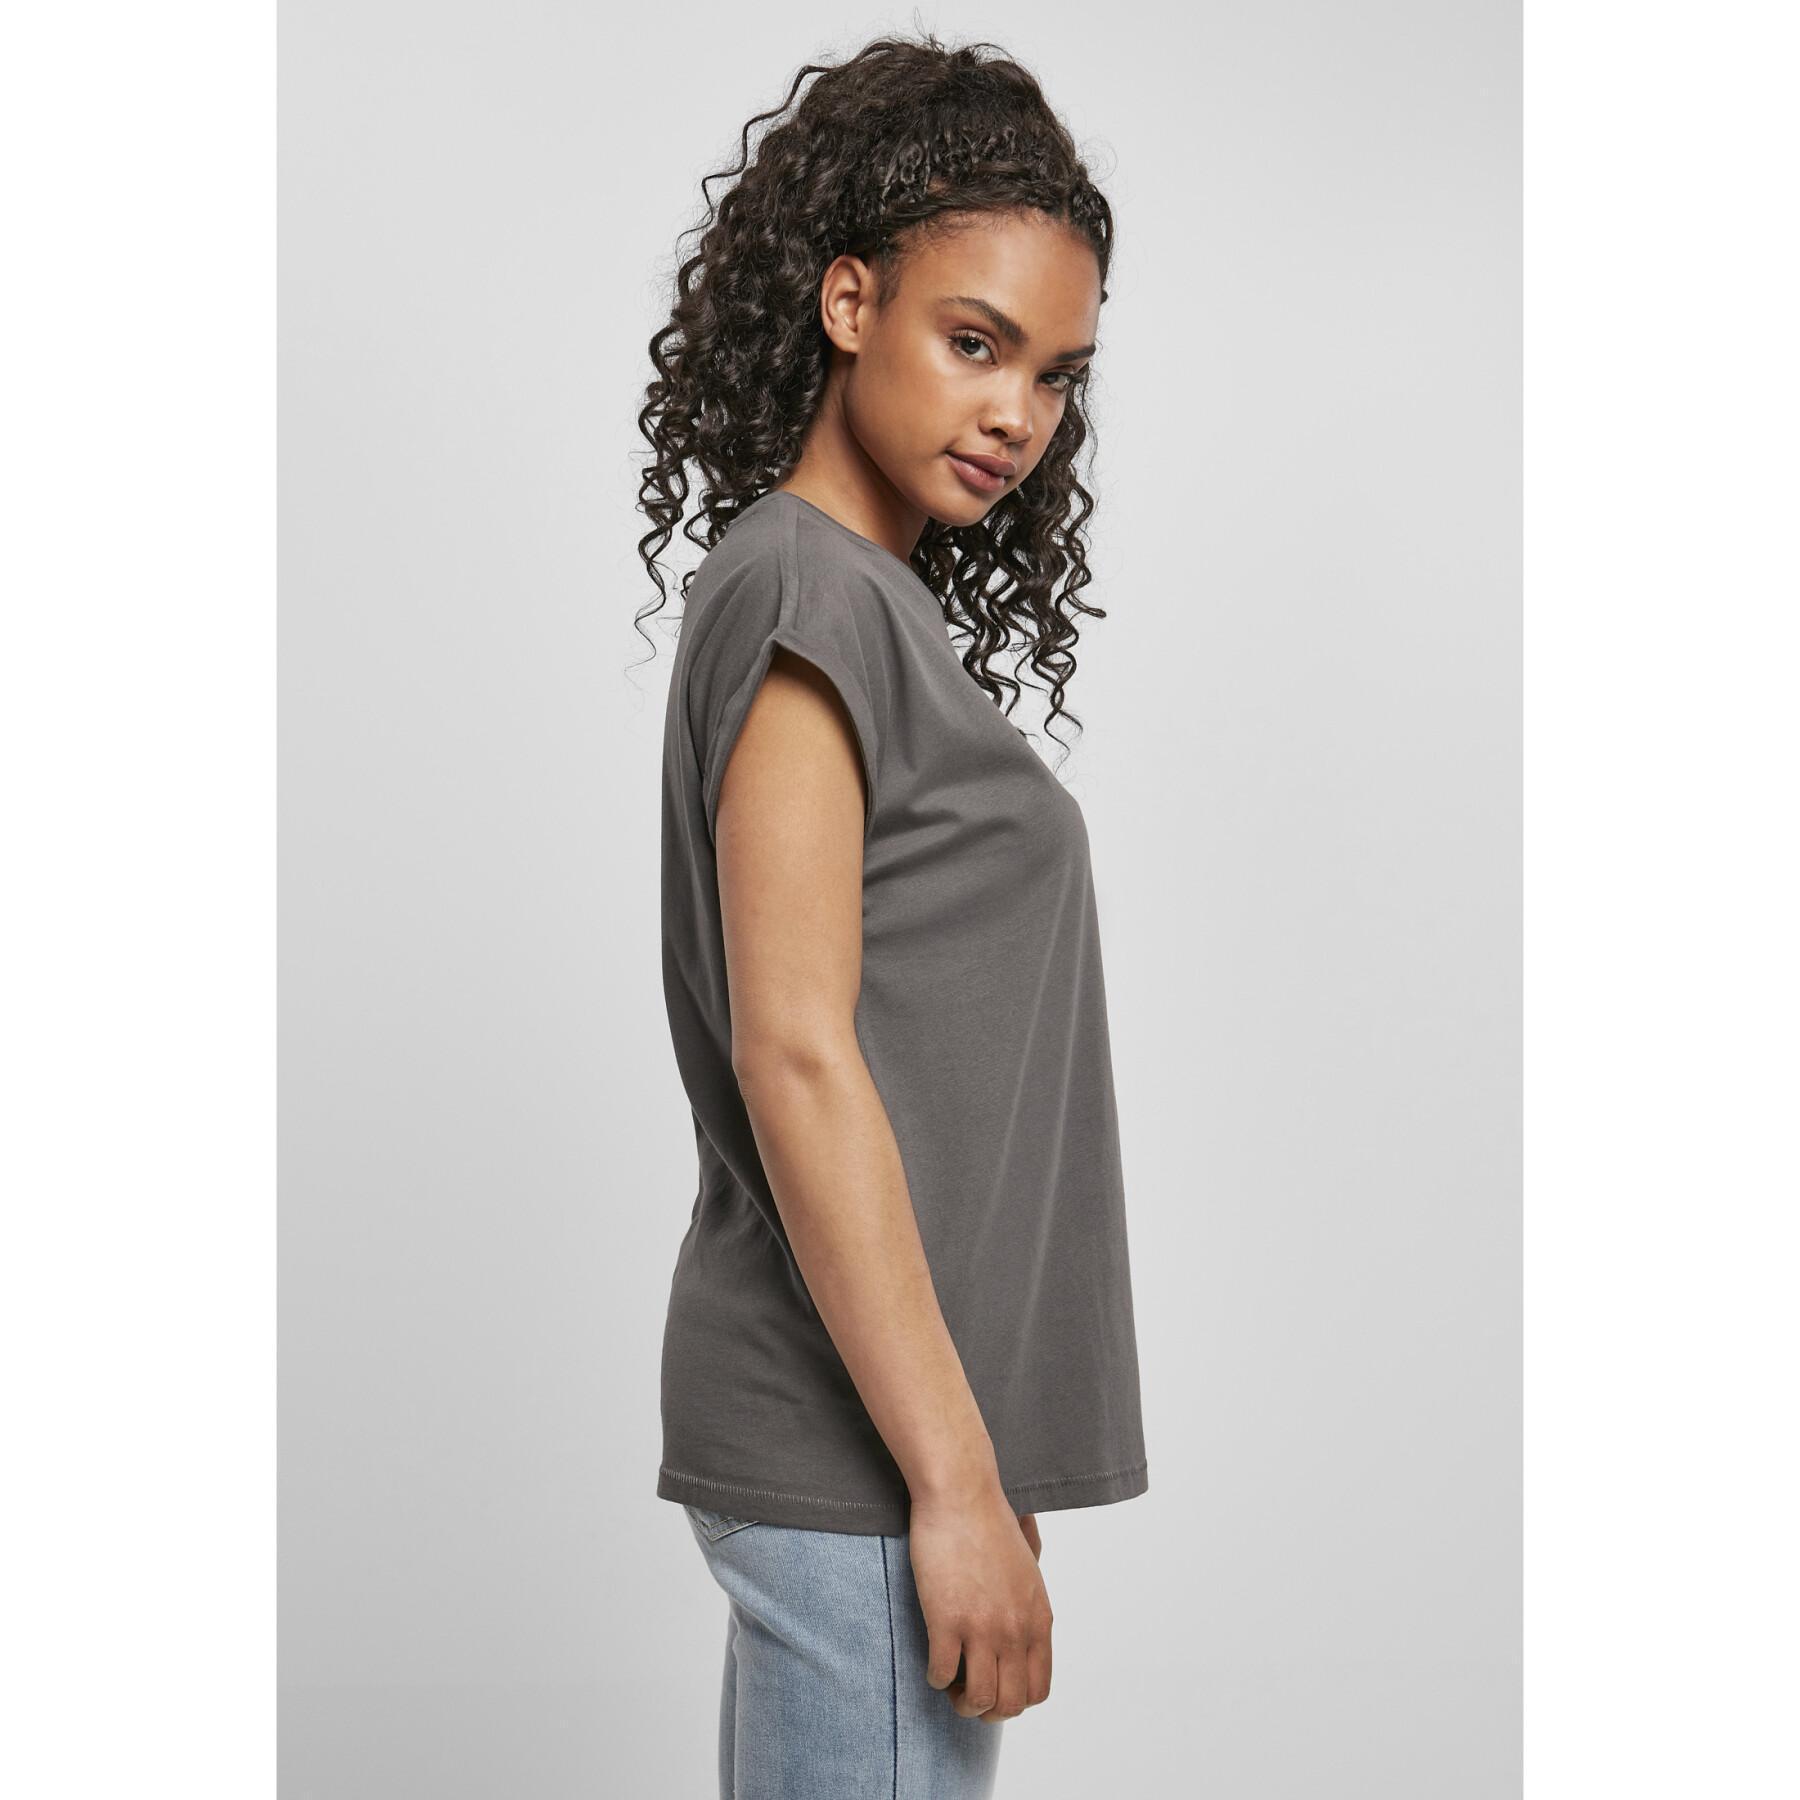 Women's T-shirt Urban Classics extended shoulder-grandes tailles